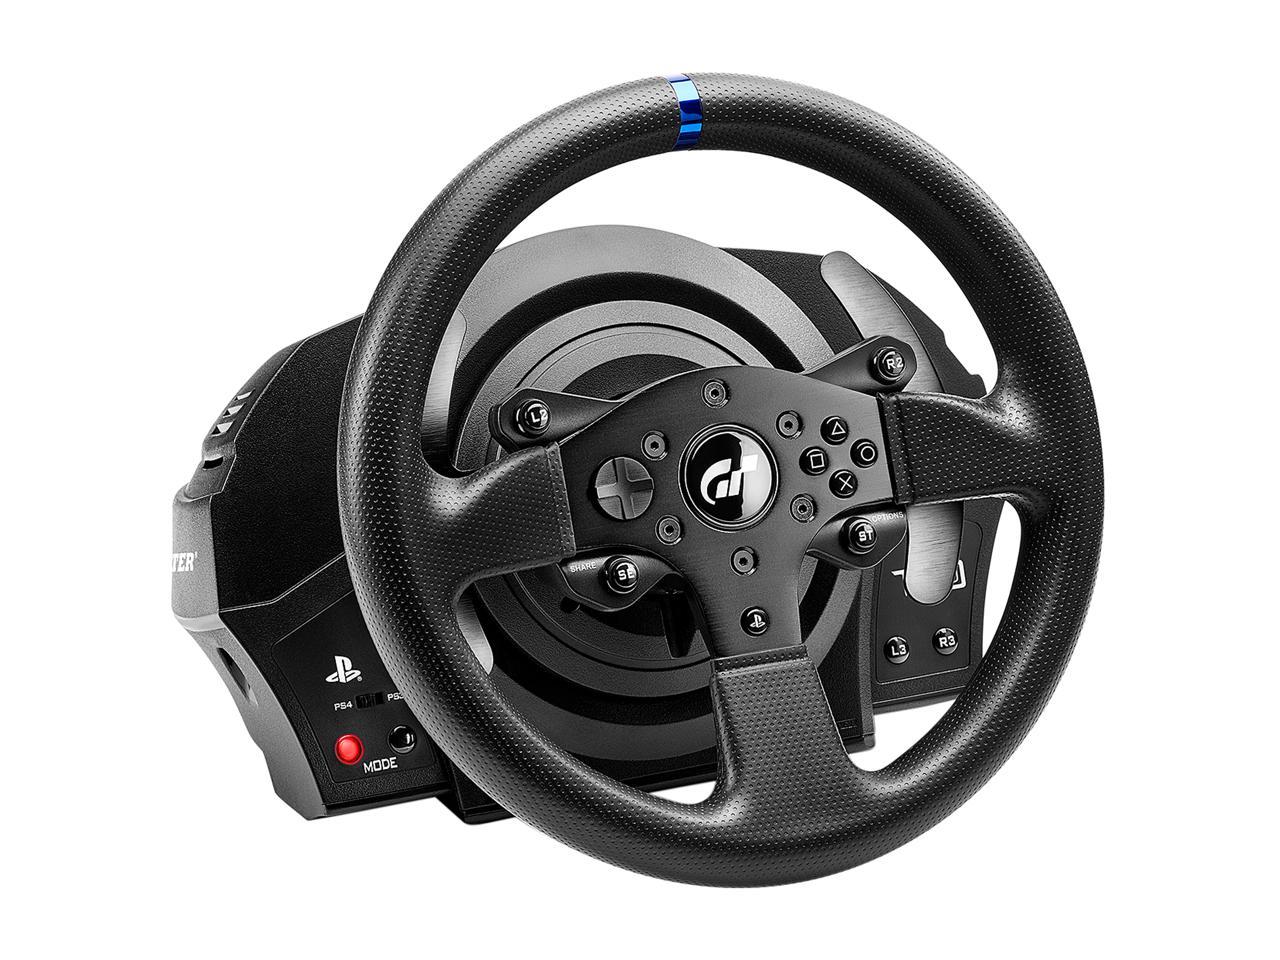 Thrustmaster T300 RS GT Racing Wheel